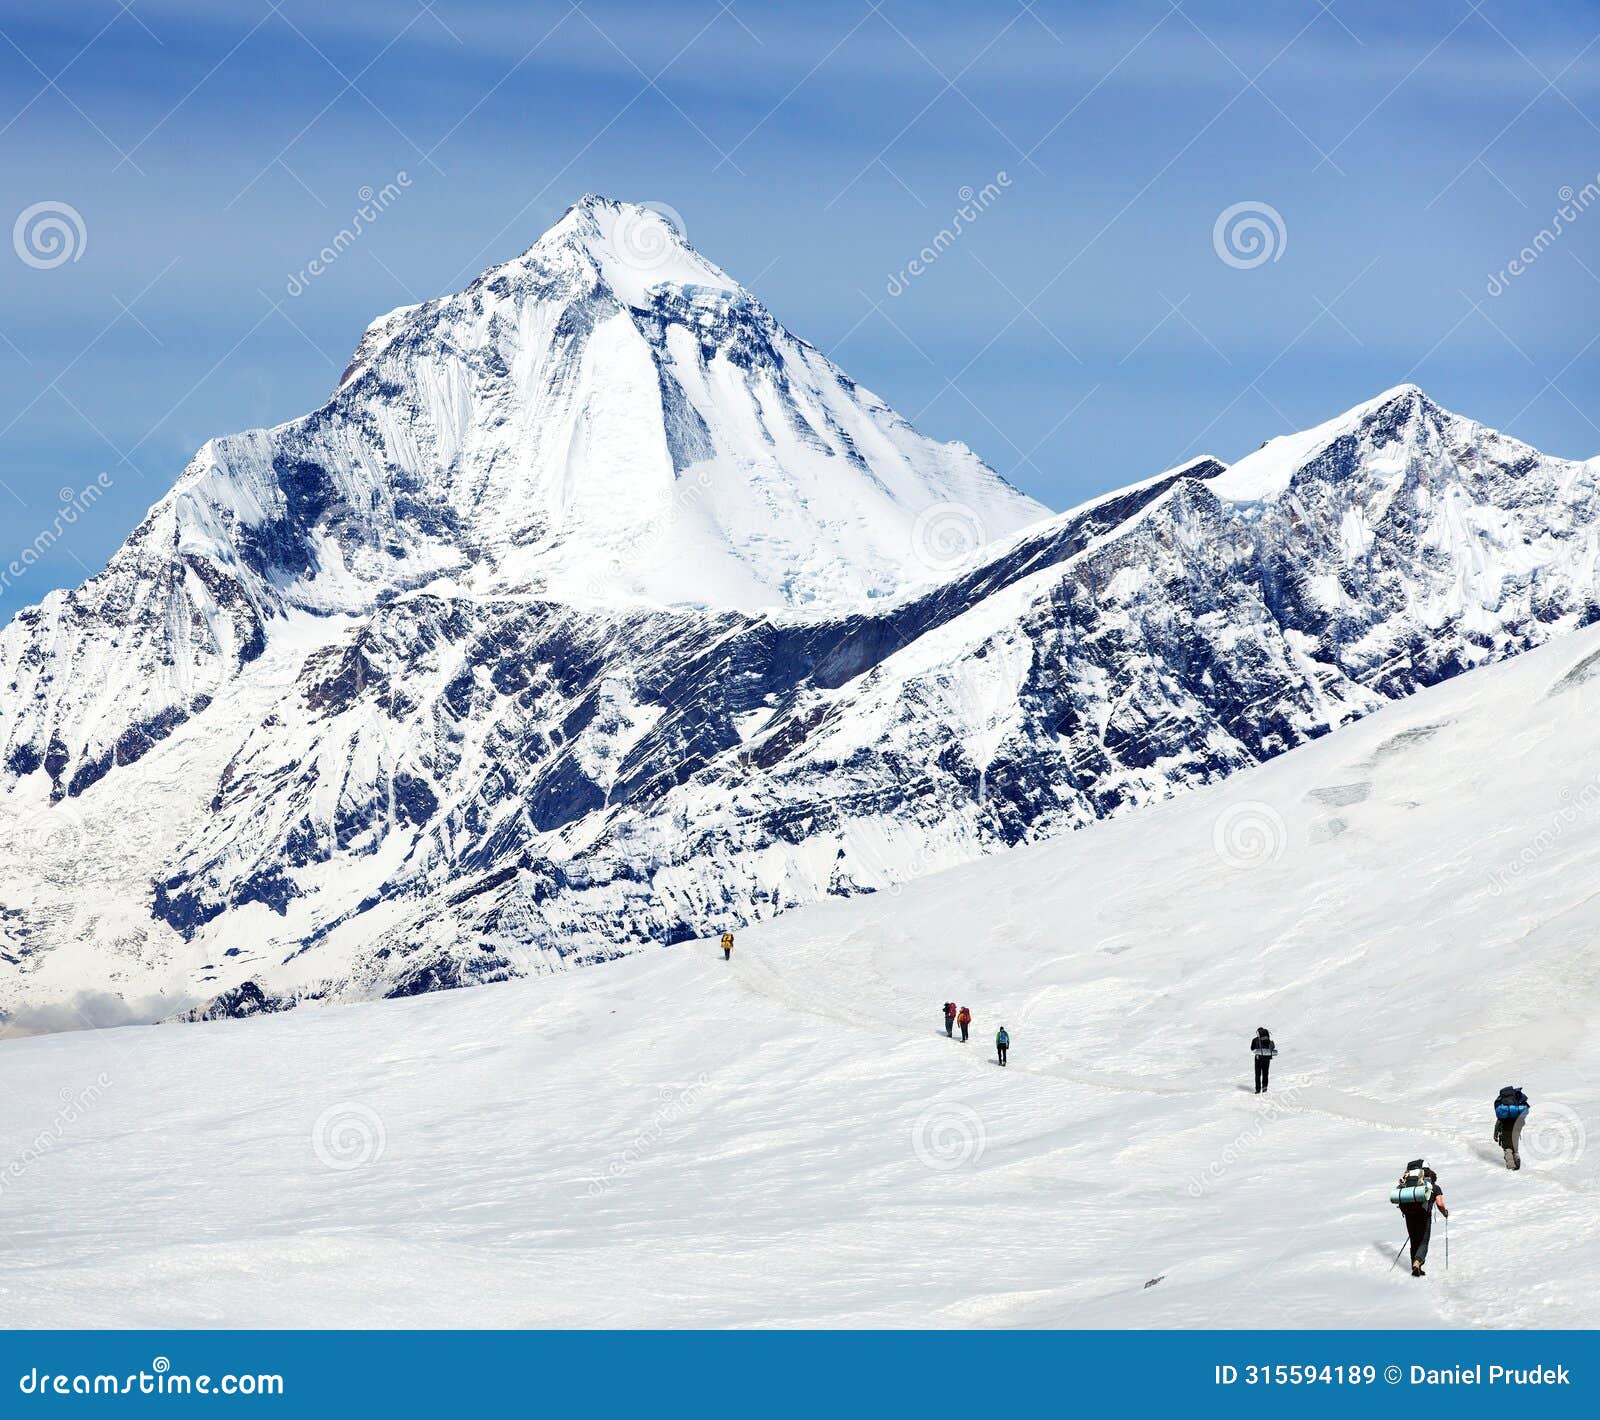 mount dhaulagiri, hikers on glacier, himalayas mountains